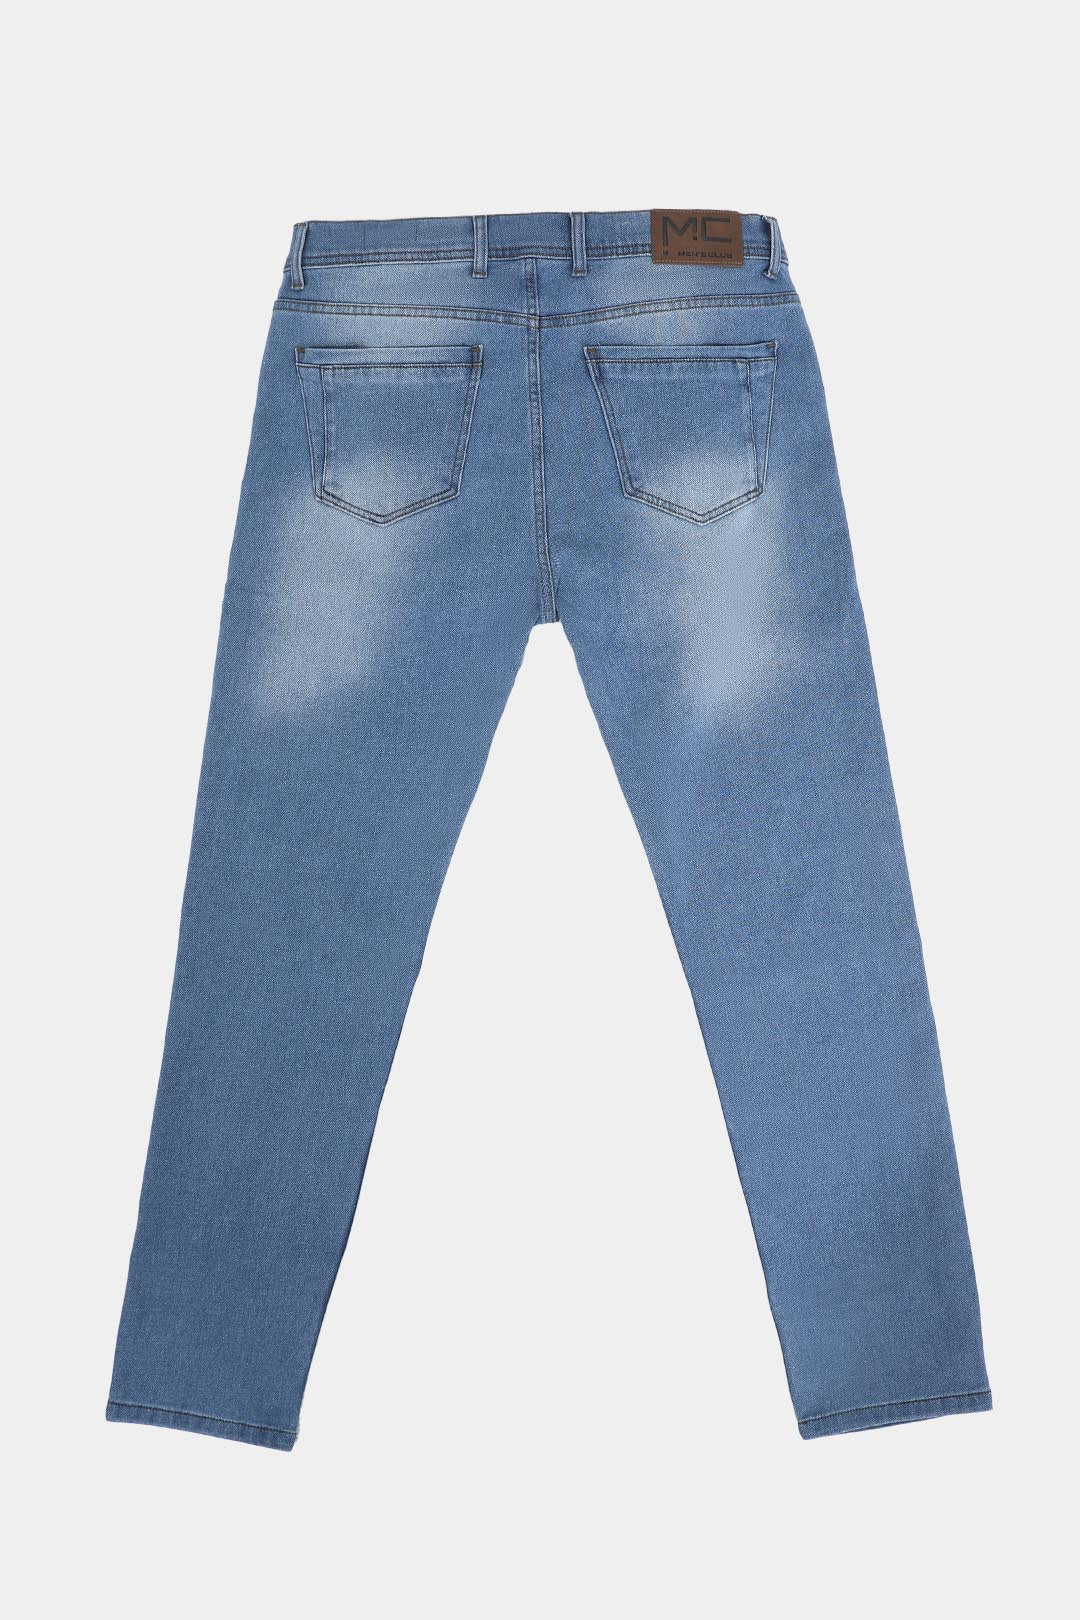 Light Blue Slim Fit Jean Pants